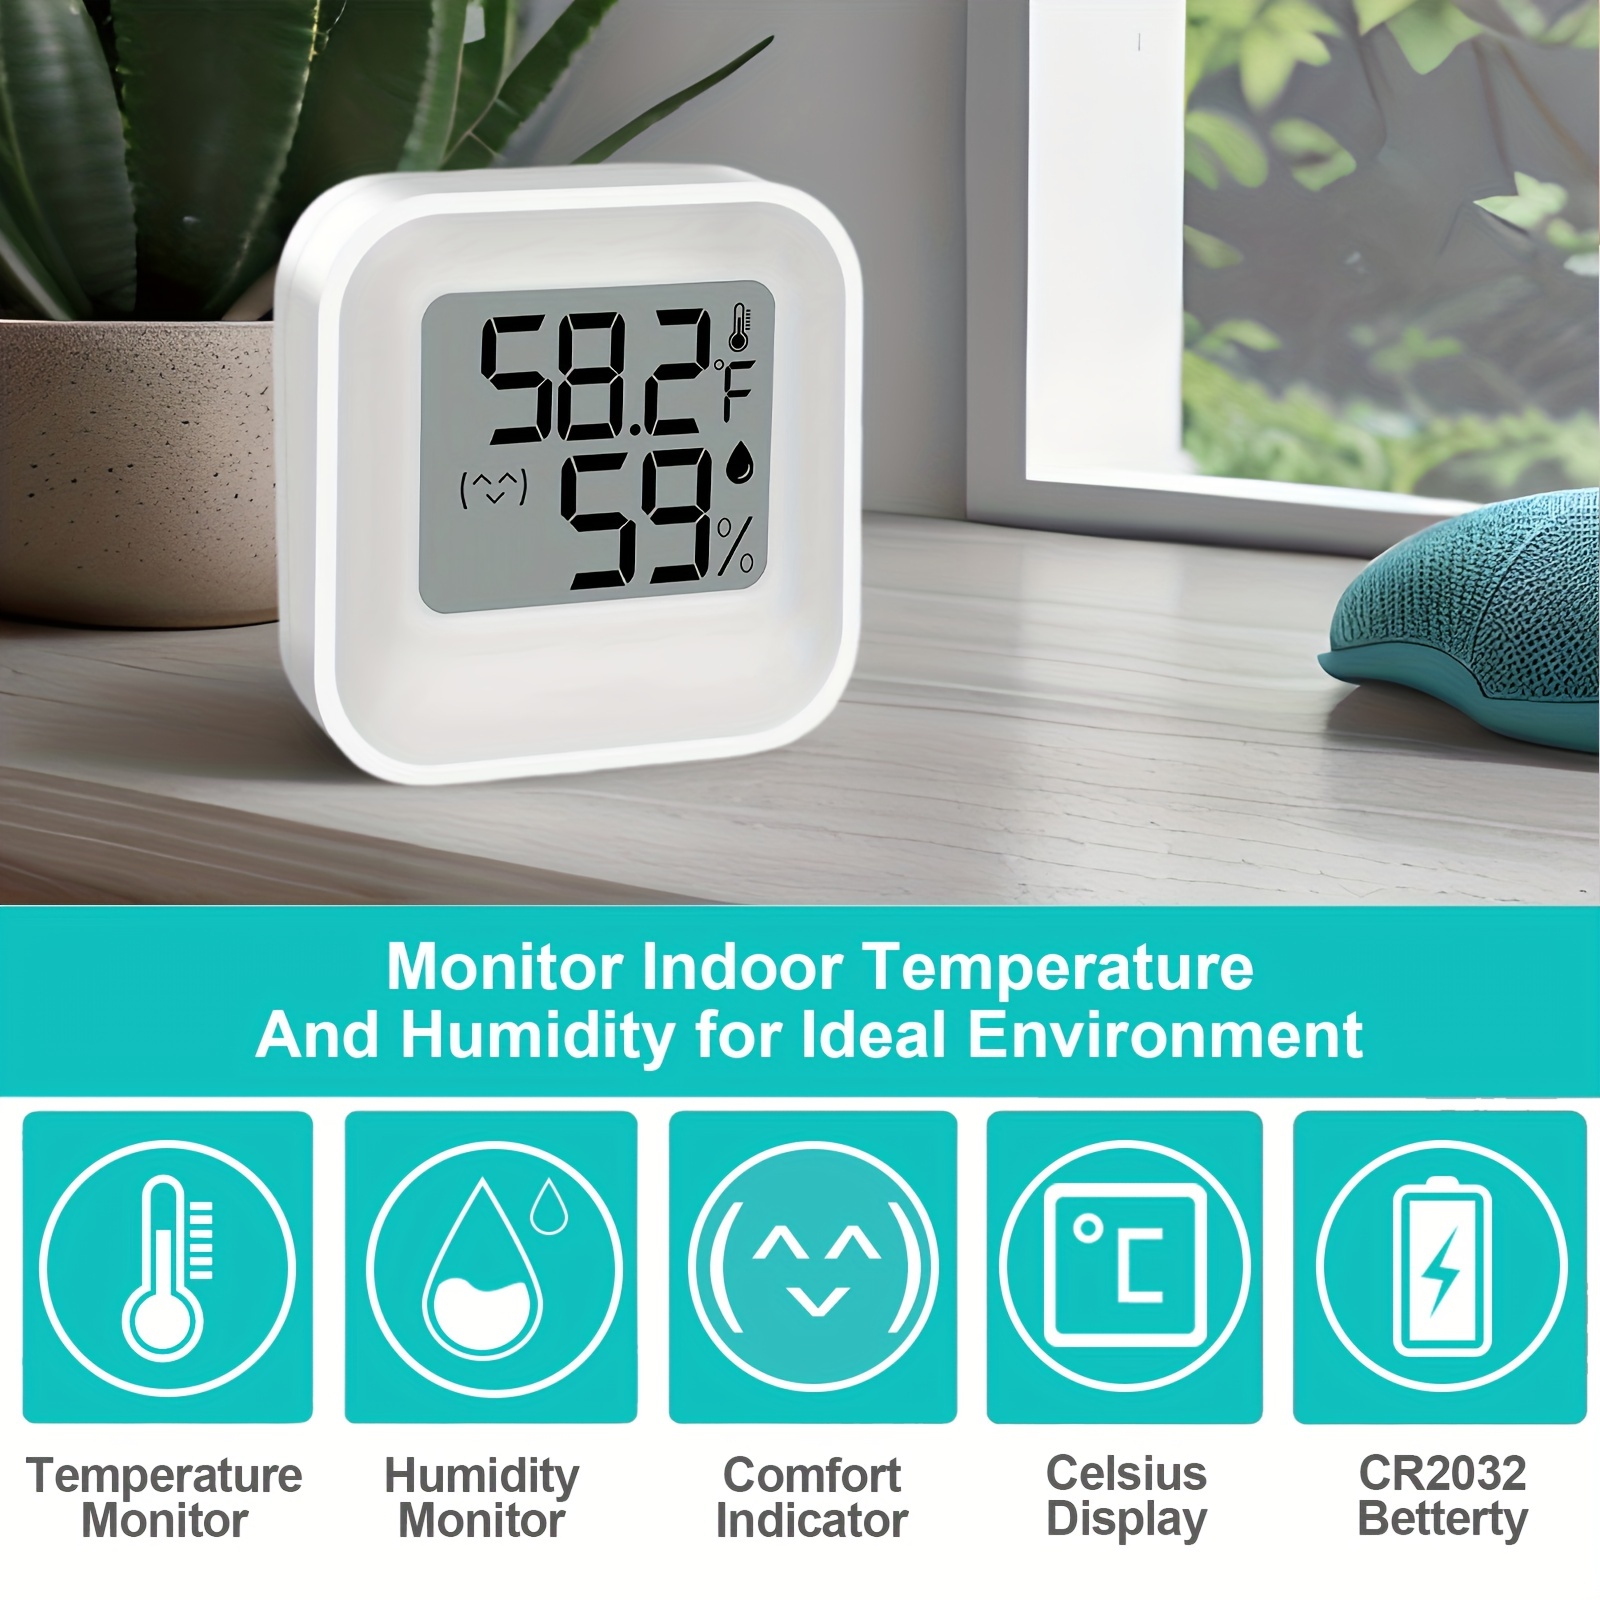 DigitalTemperature Meter Humidity Gauge Monitor With LCD, Alarm